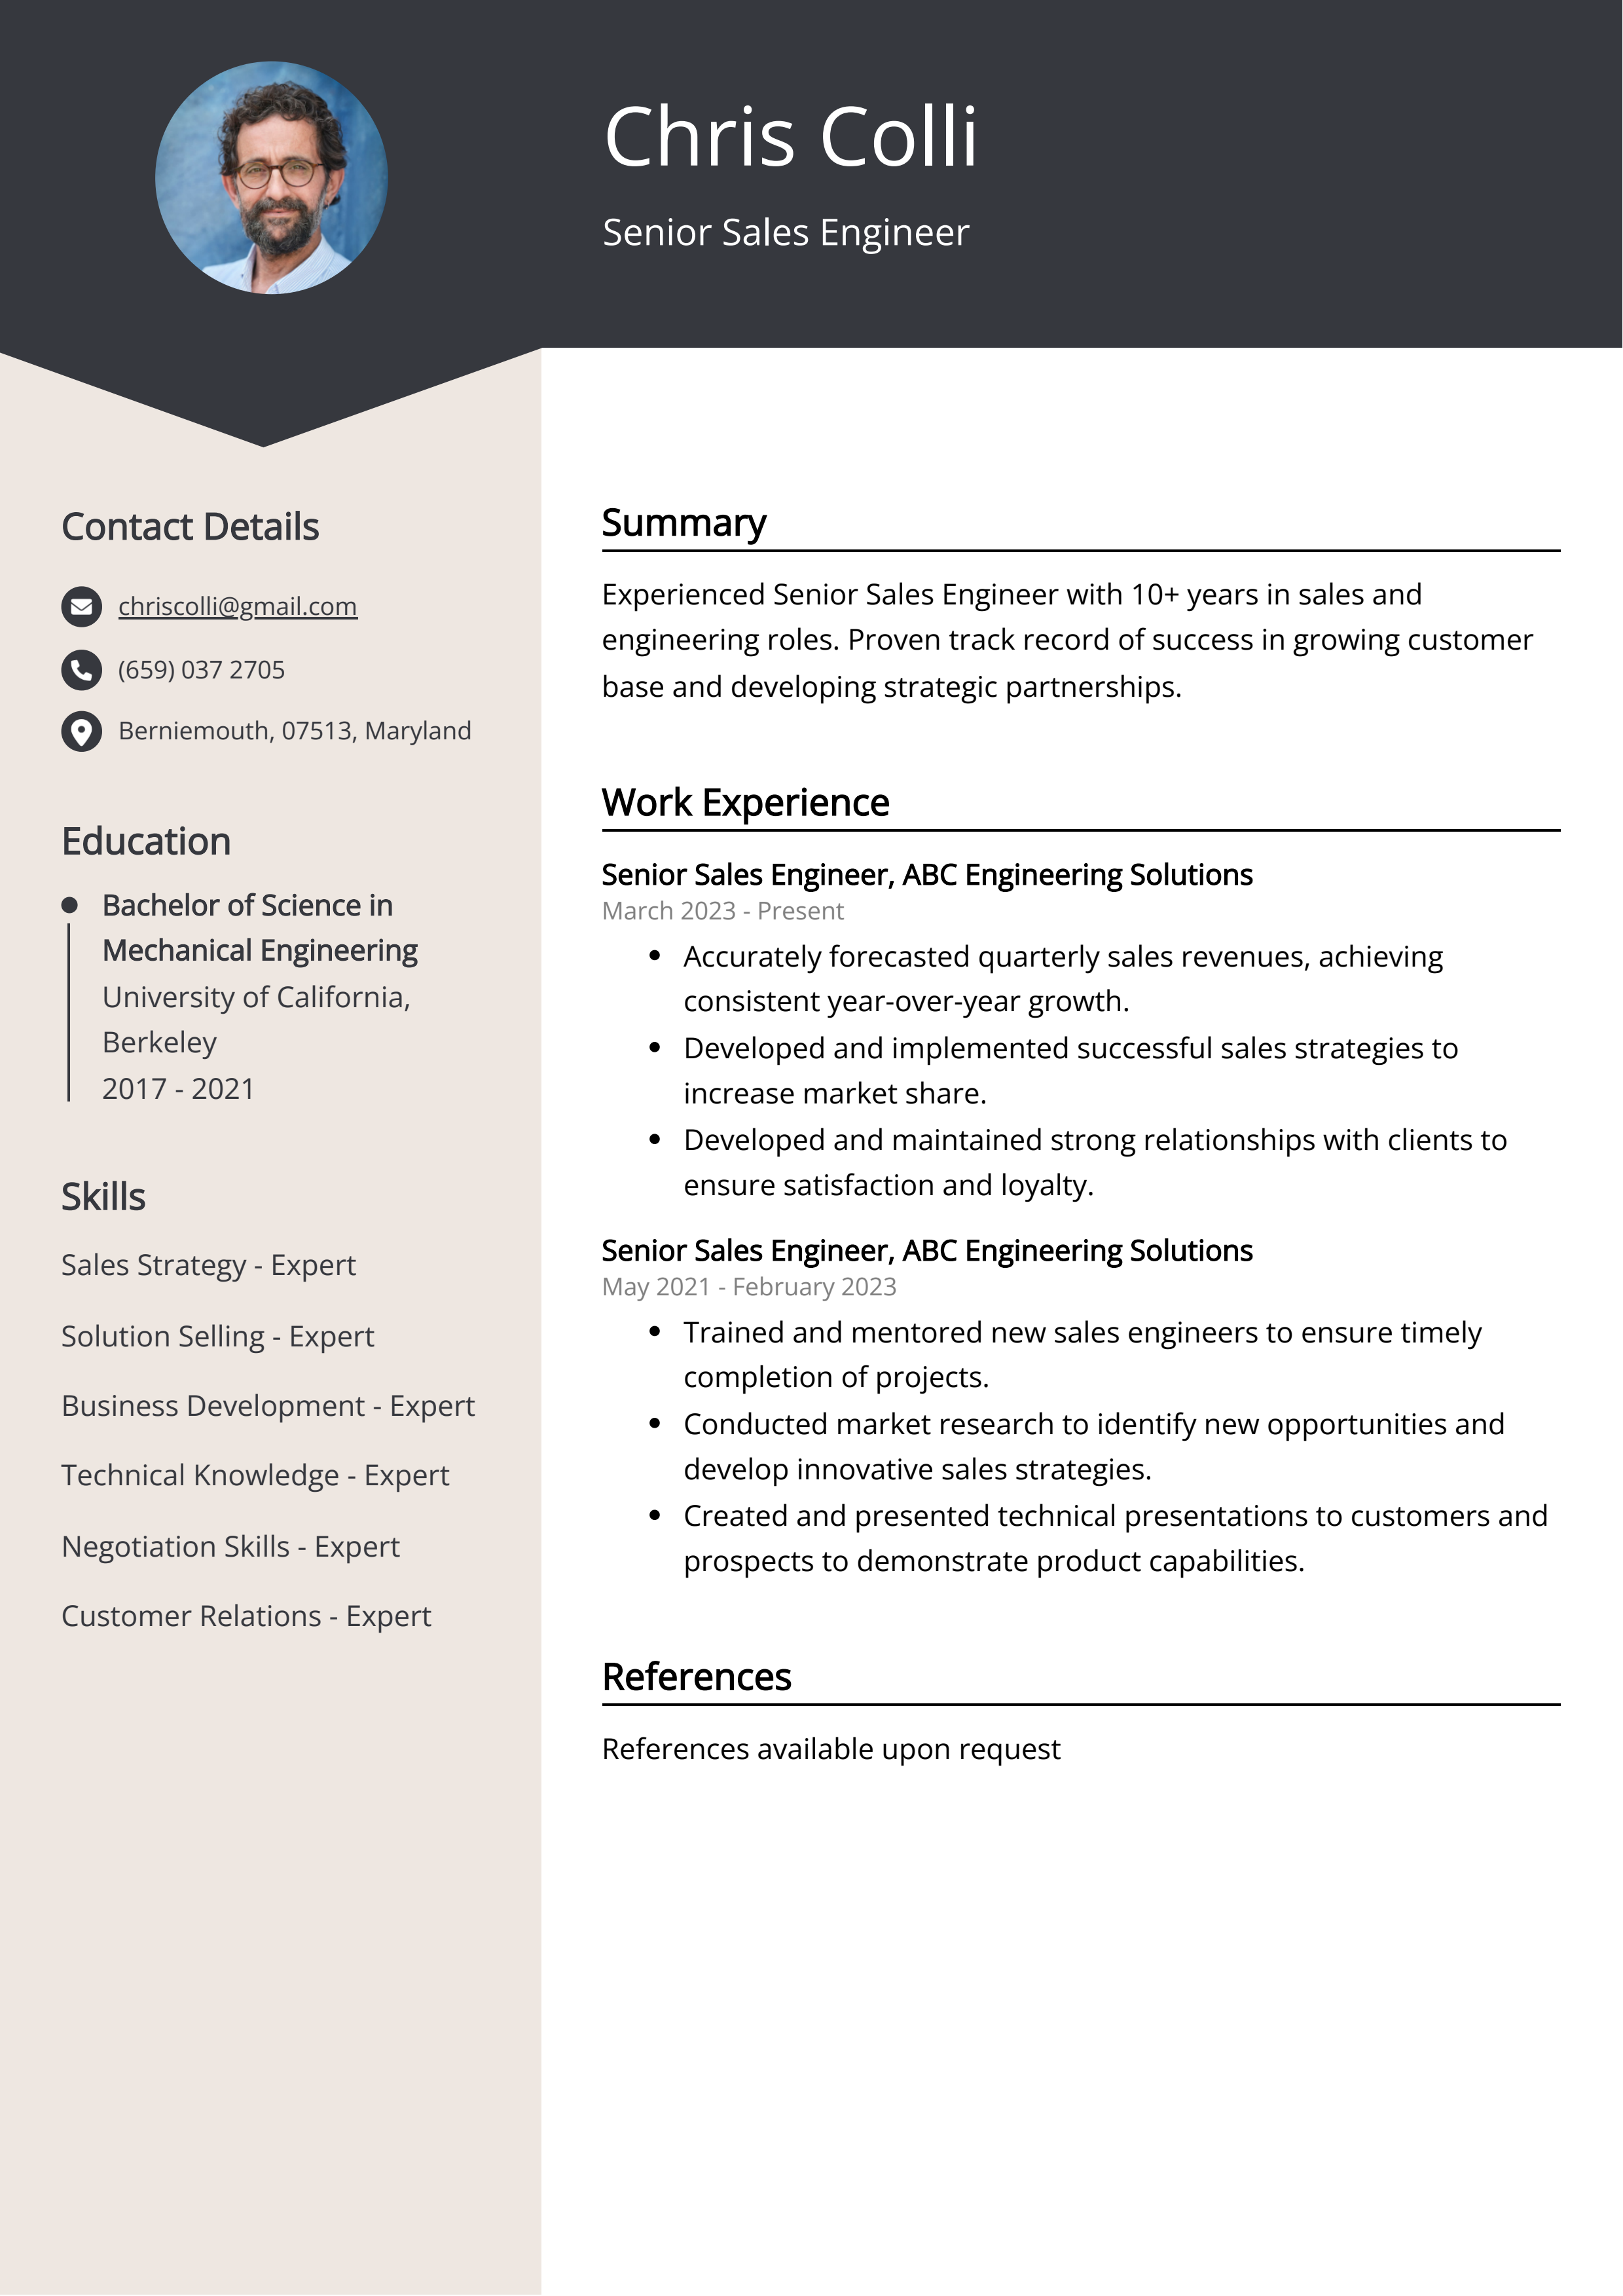 Senior Sales Engineer CV Example